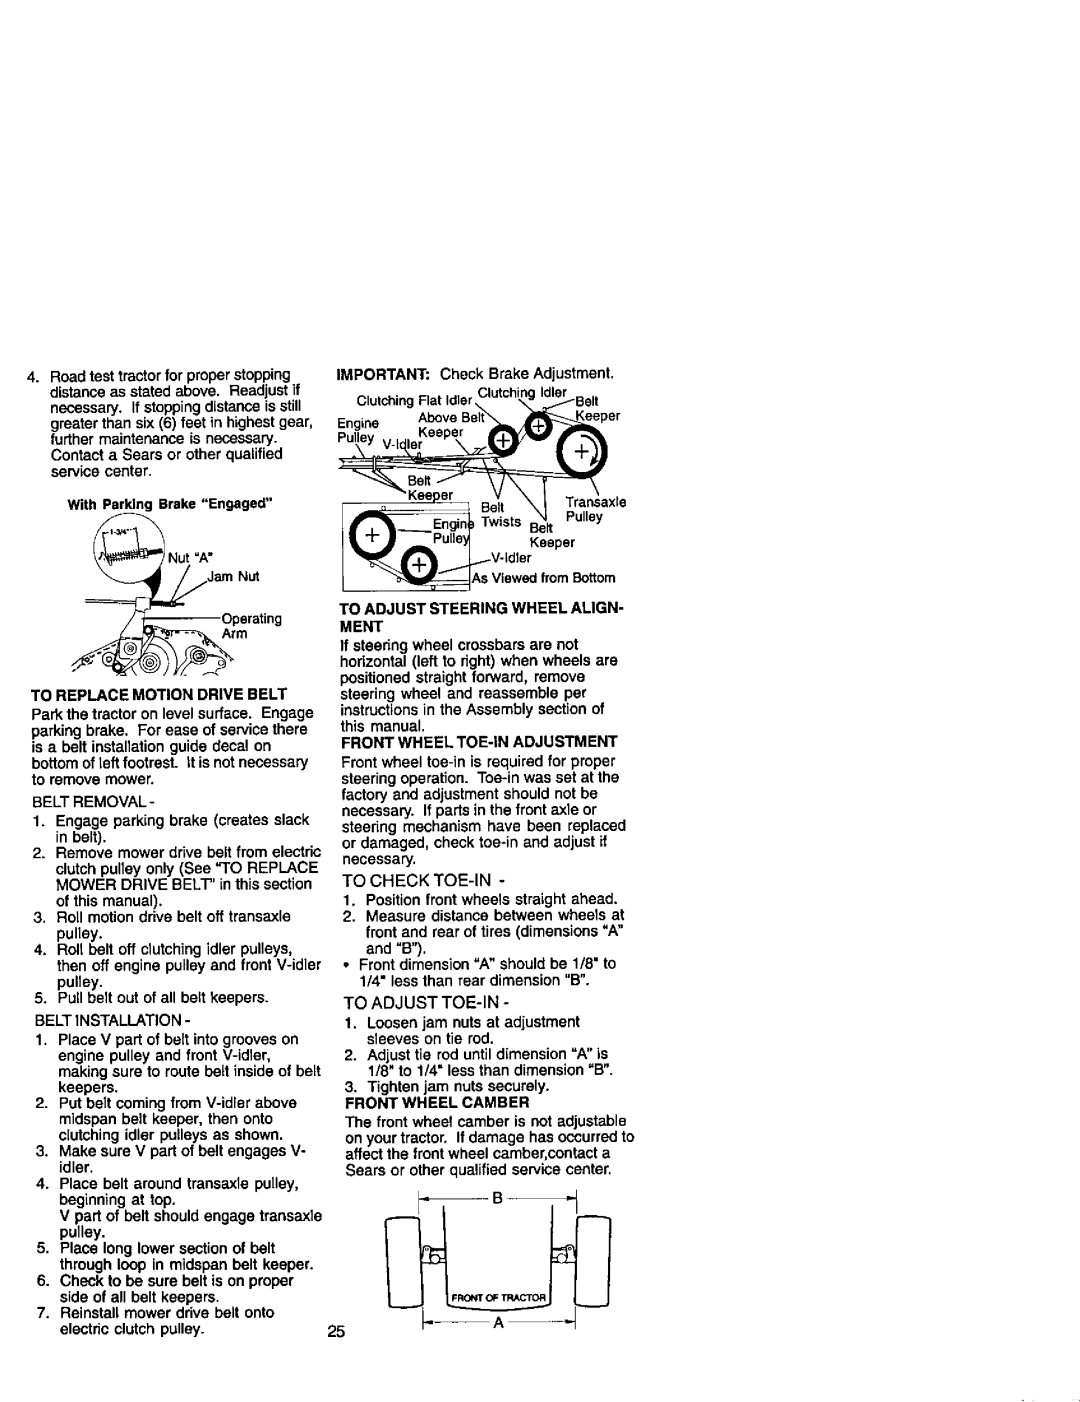 Craftsman 917.27499 manual I.utoA, En0.in,w,=aB 